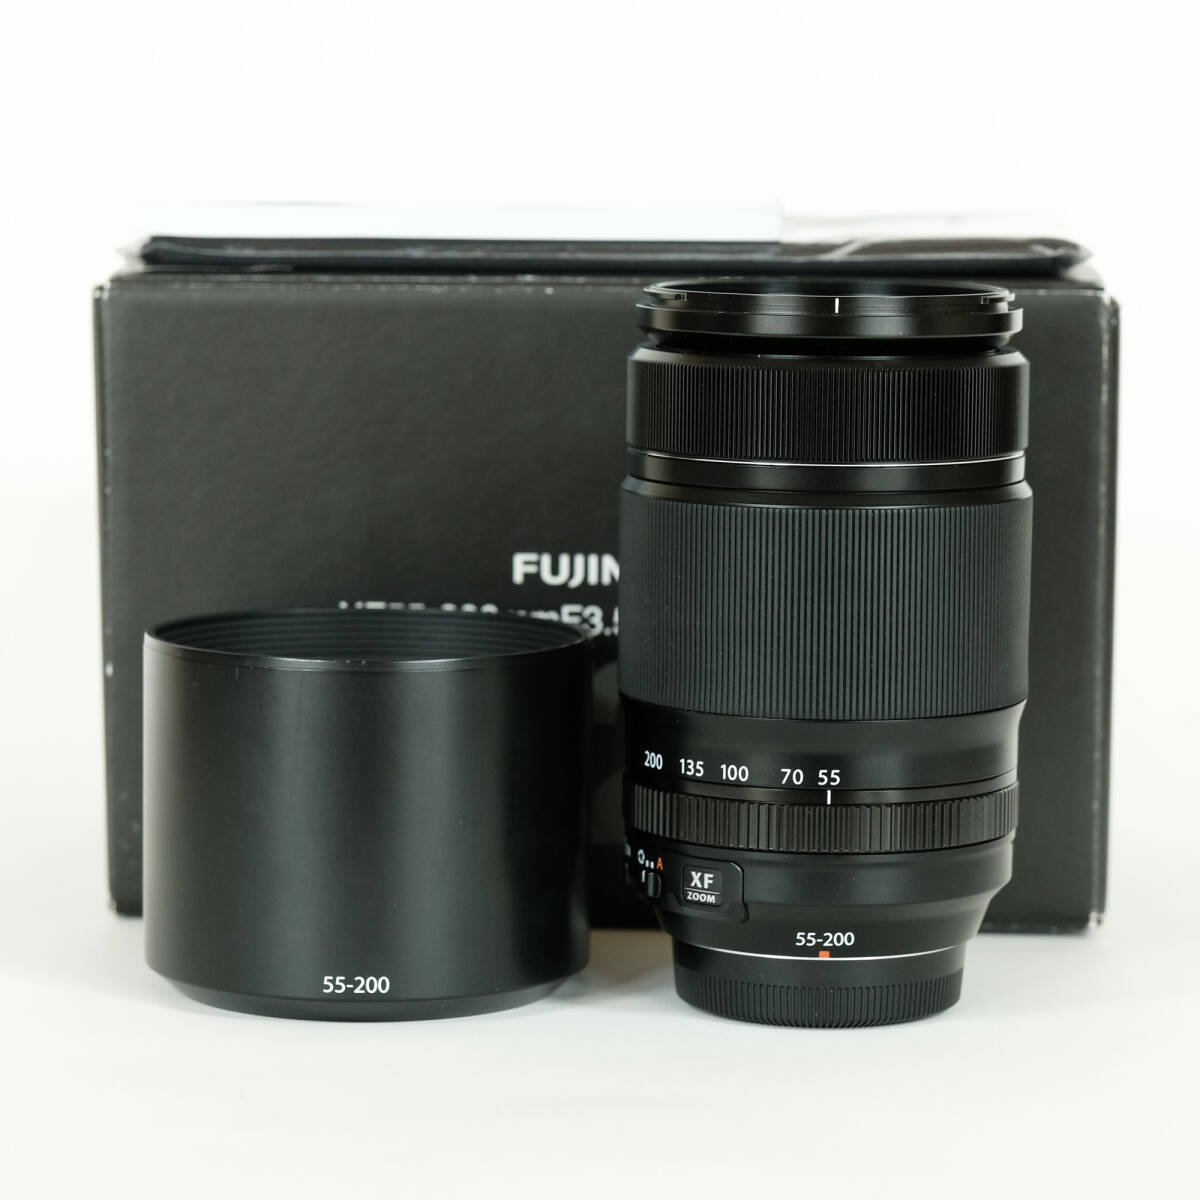 [ superior article ] FUJIFILM XF55-200mmF3.5-4.8 R LM OIS / Fuji Film X mount / APS-C